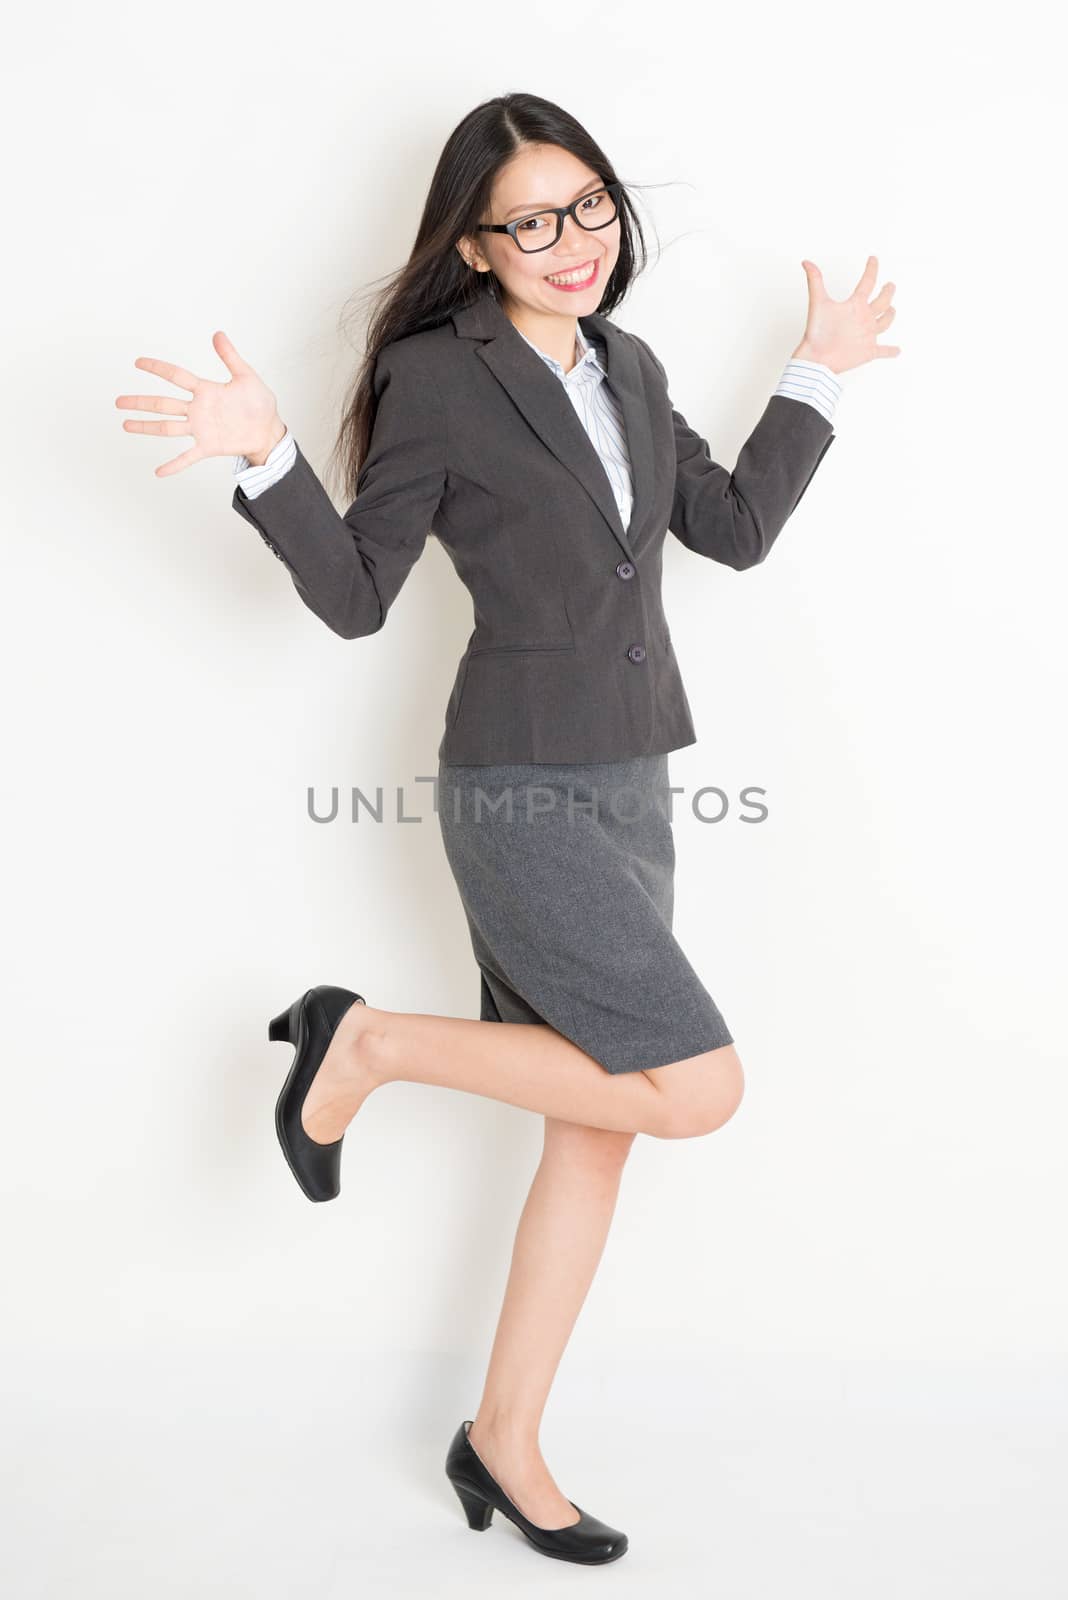 Portrait of happy Asian businesswoman in formalwear smiling, full body standing on plain background.